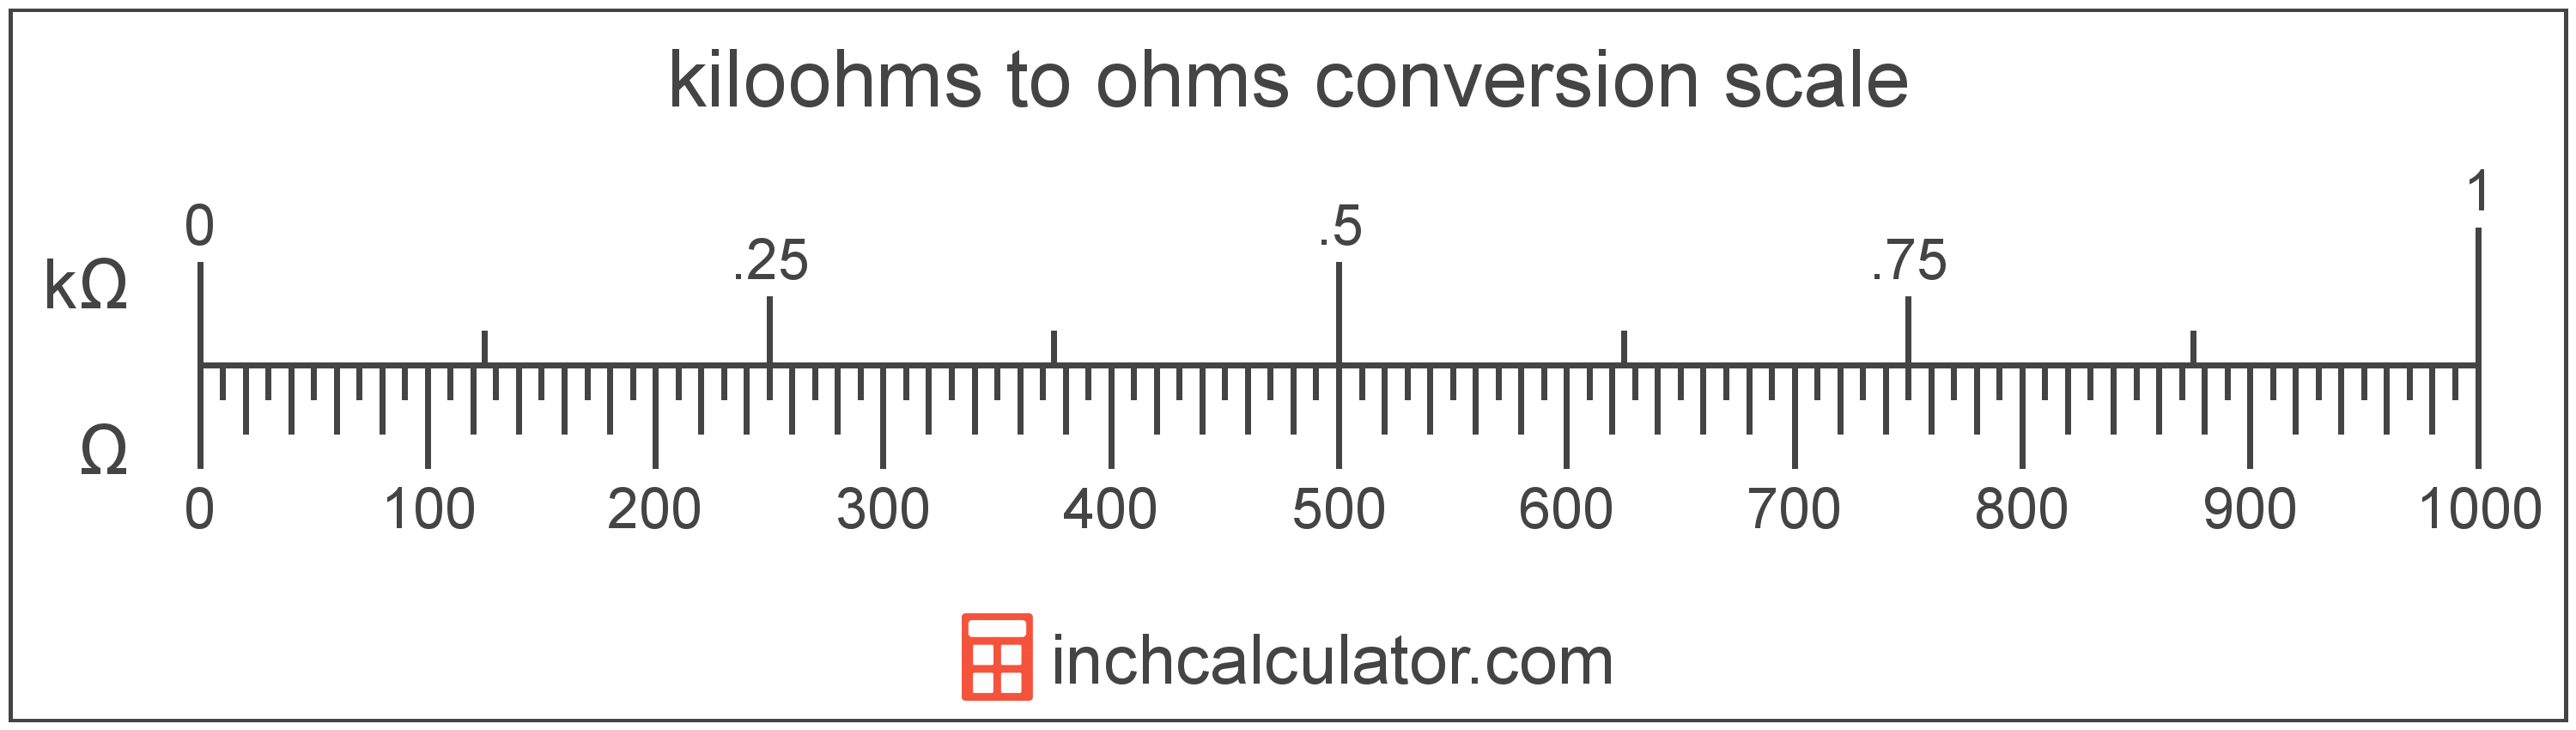 Ohms Conversion Chart